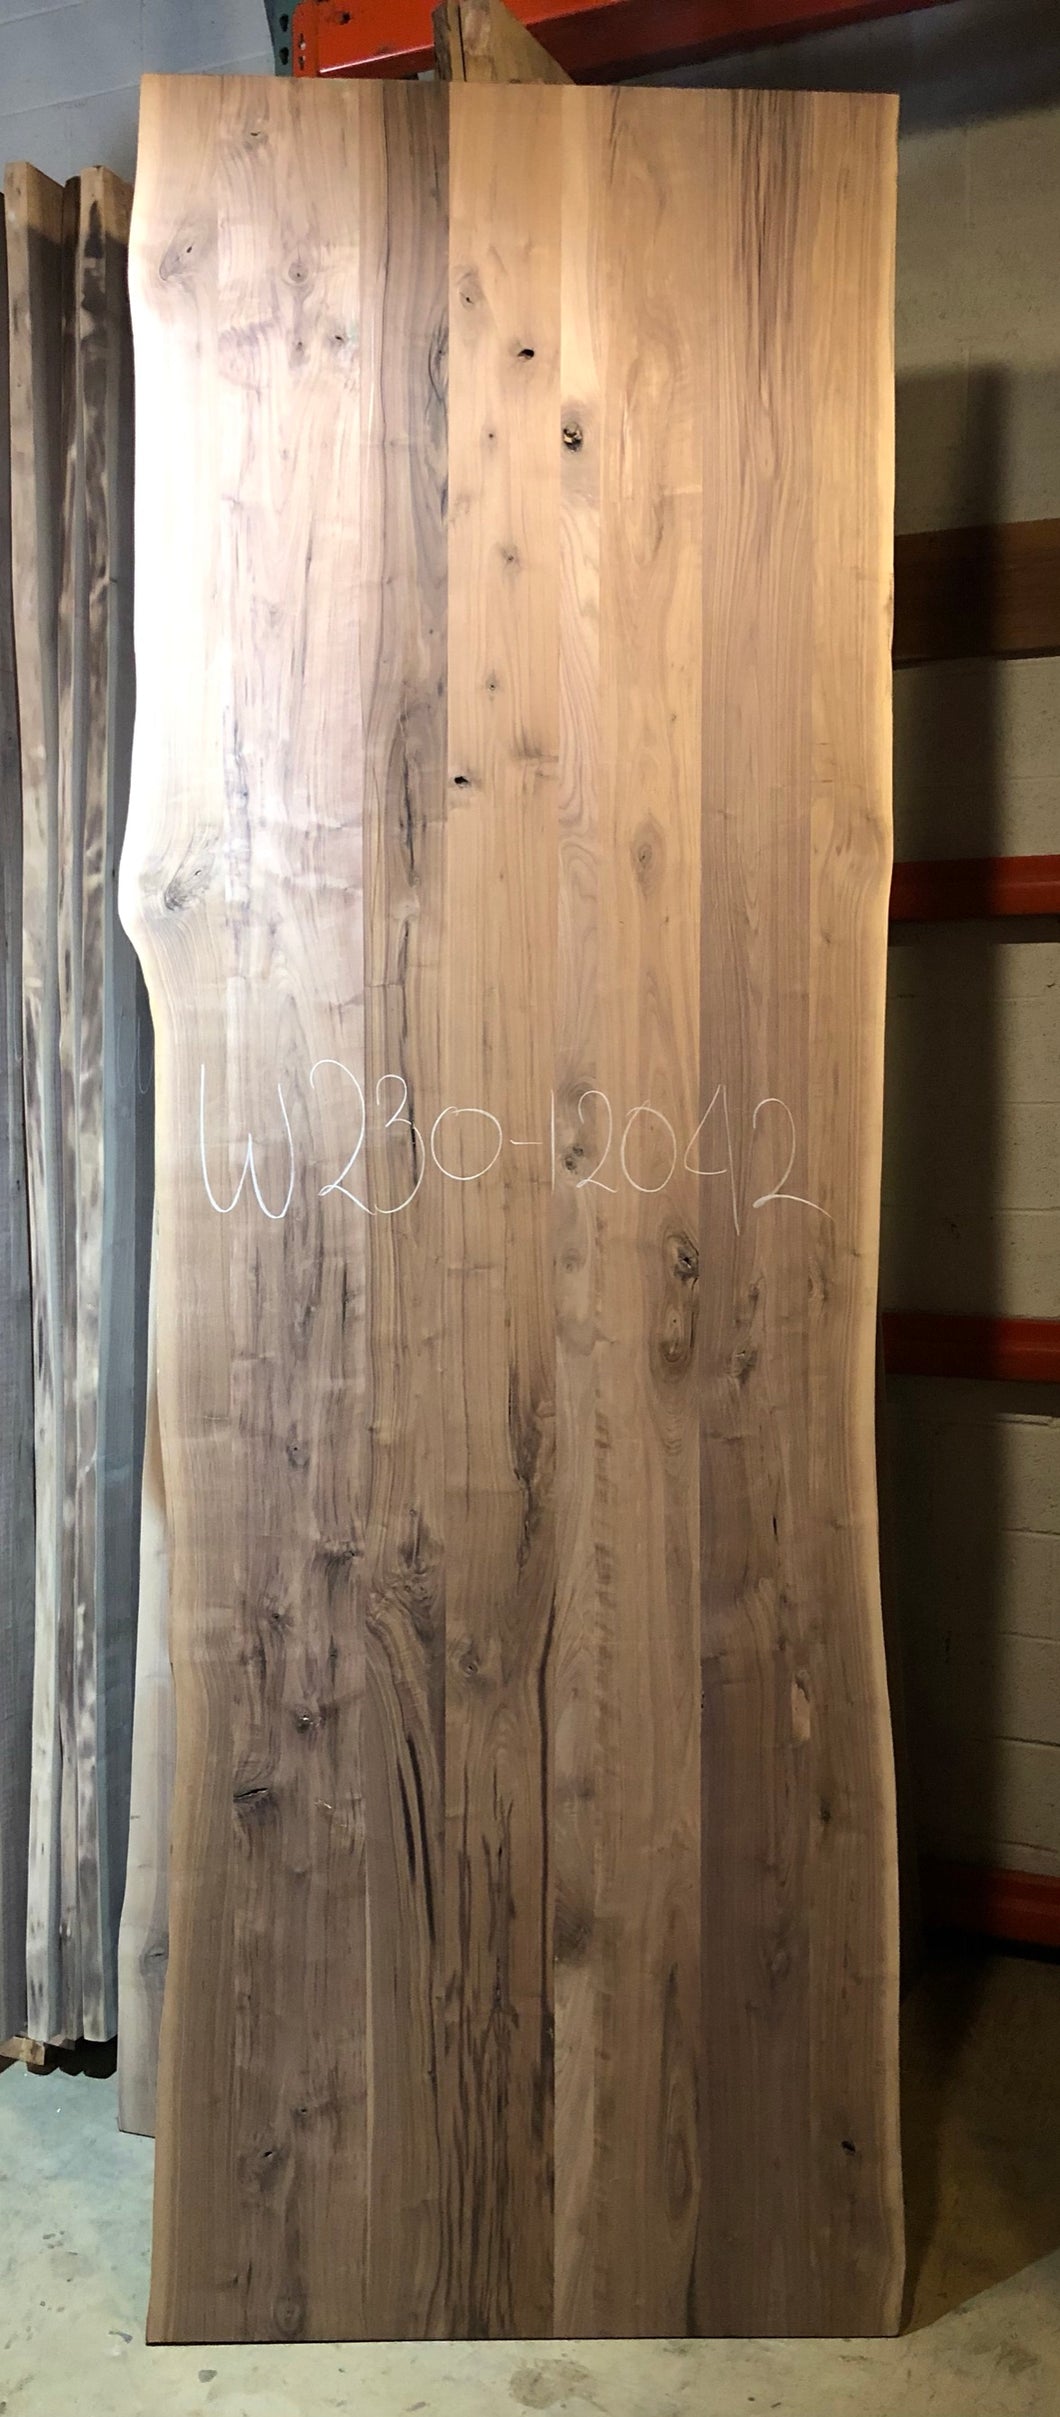 W230-12042 Live edge walnut wood 120x42